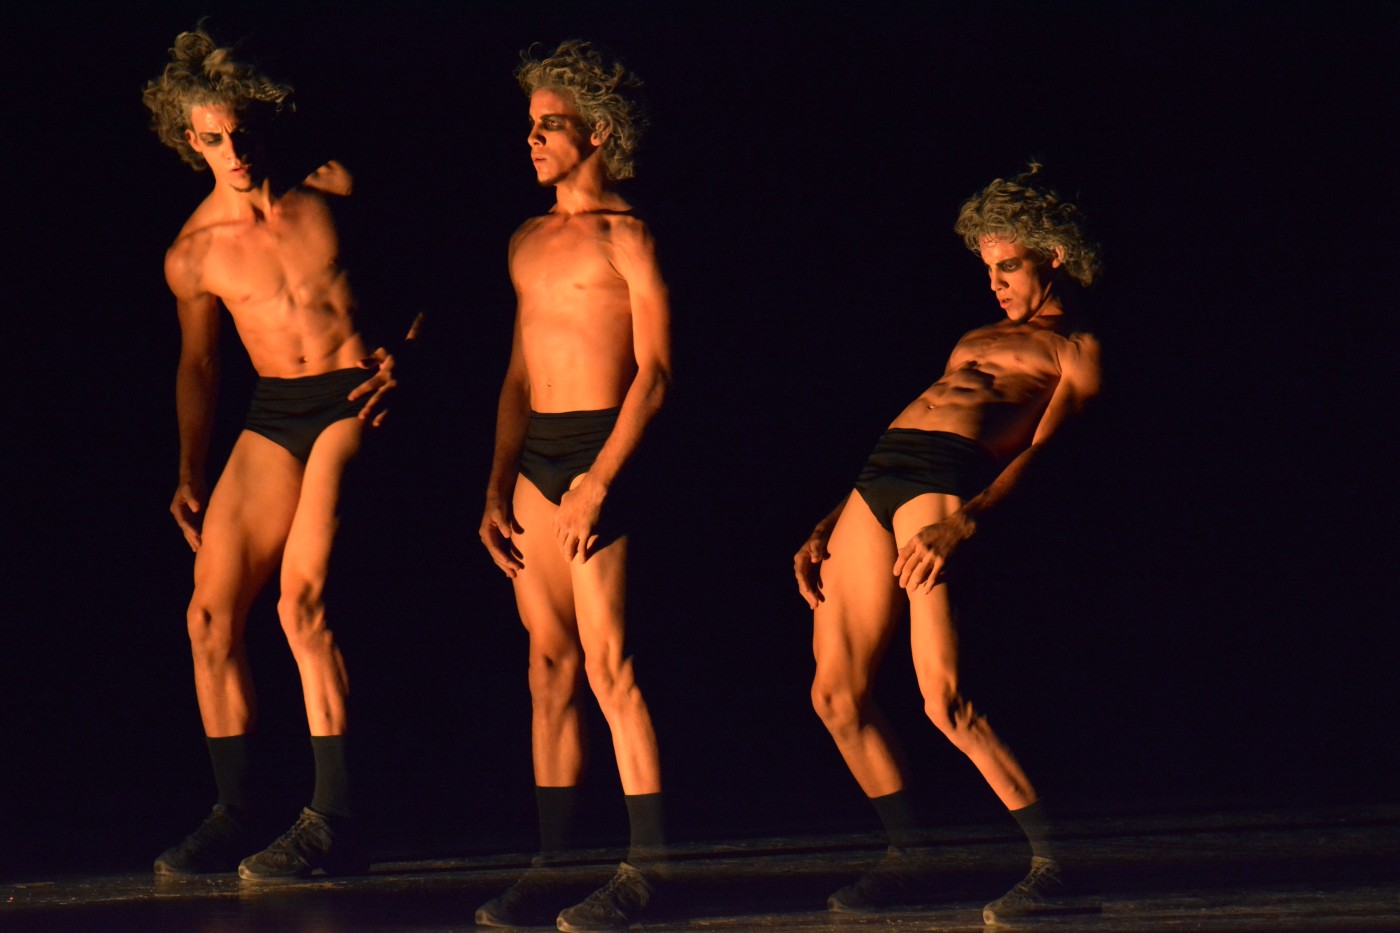 Fragmento de la obra Inside, coreografía de Vianky González, interpretada por Leonardo Domínguez.